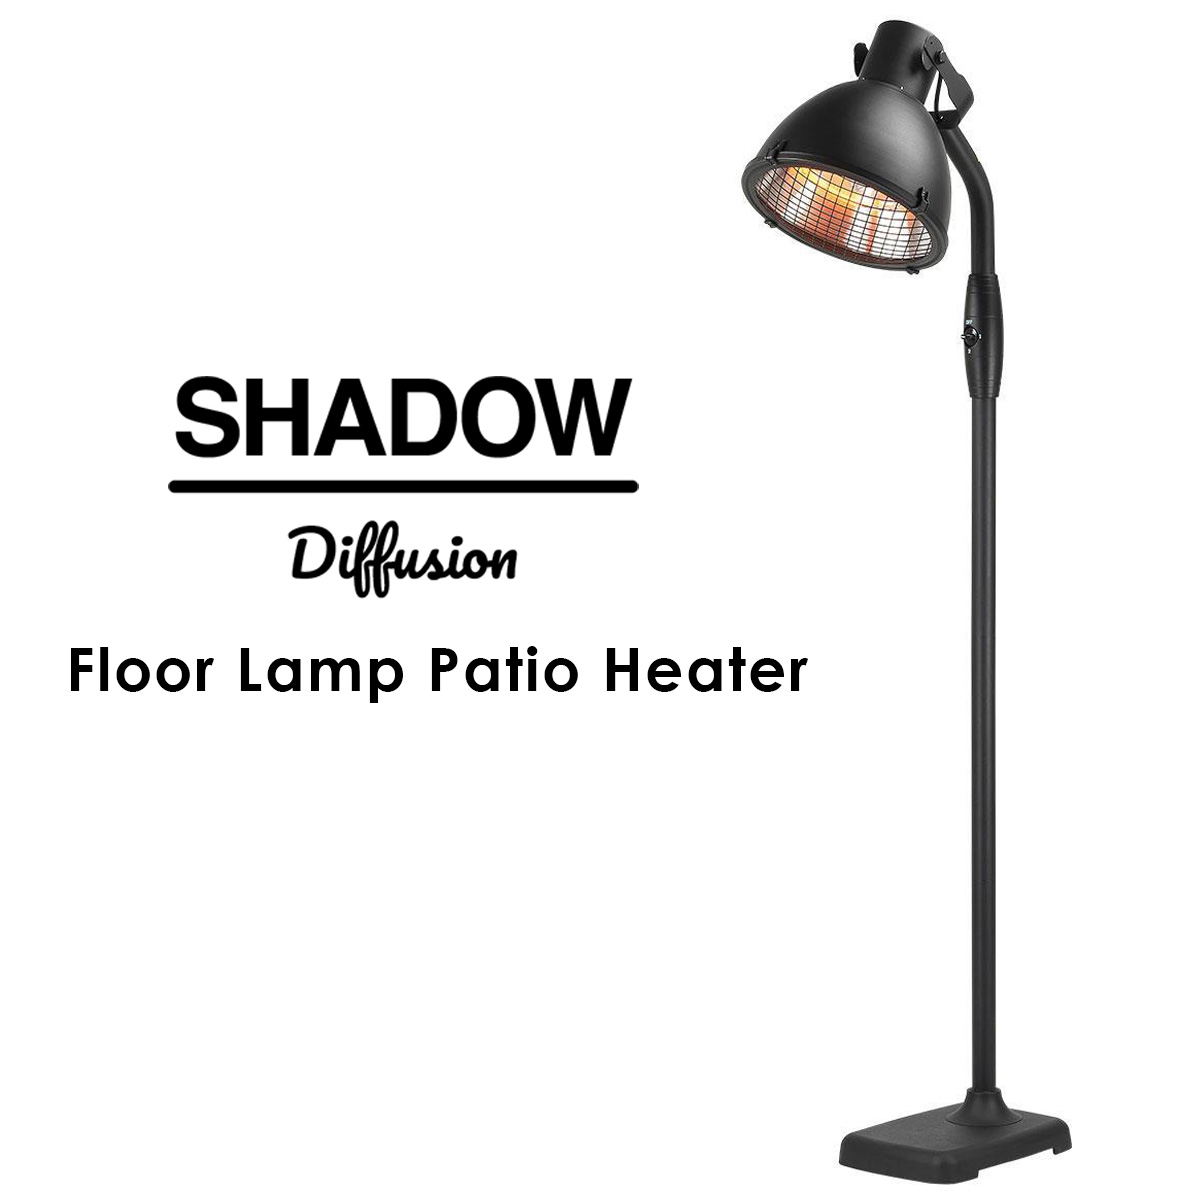 The Shadow Difusion Range - Floor lamp image